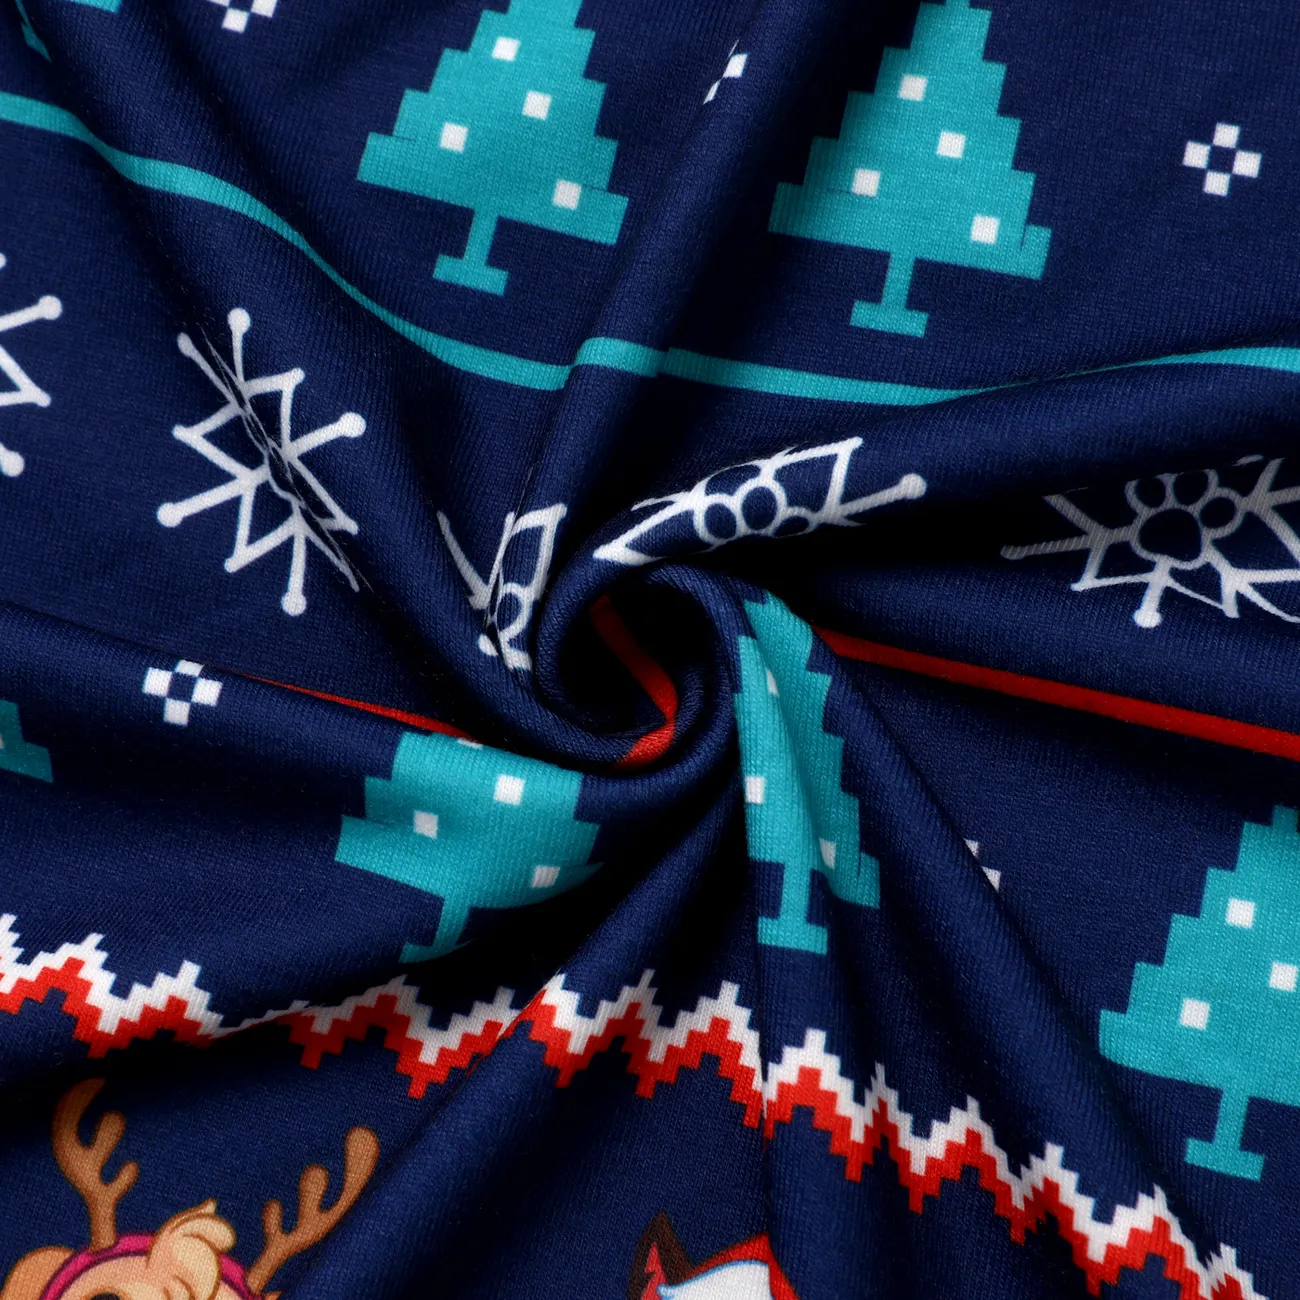 Helfer auf vier Pfoten Weihnachten Familien-Looks Langärmelig Familien-Outfits Pyjamas (Flame Resistant) tiefes Blau big image 1